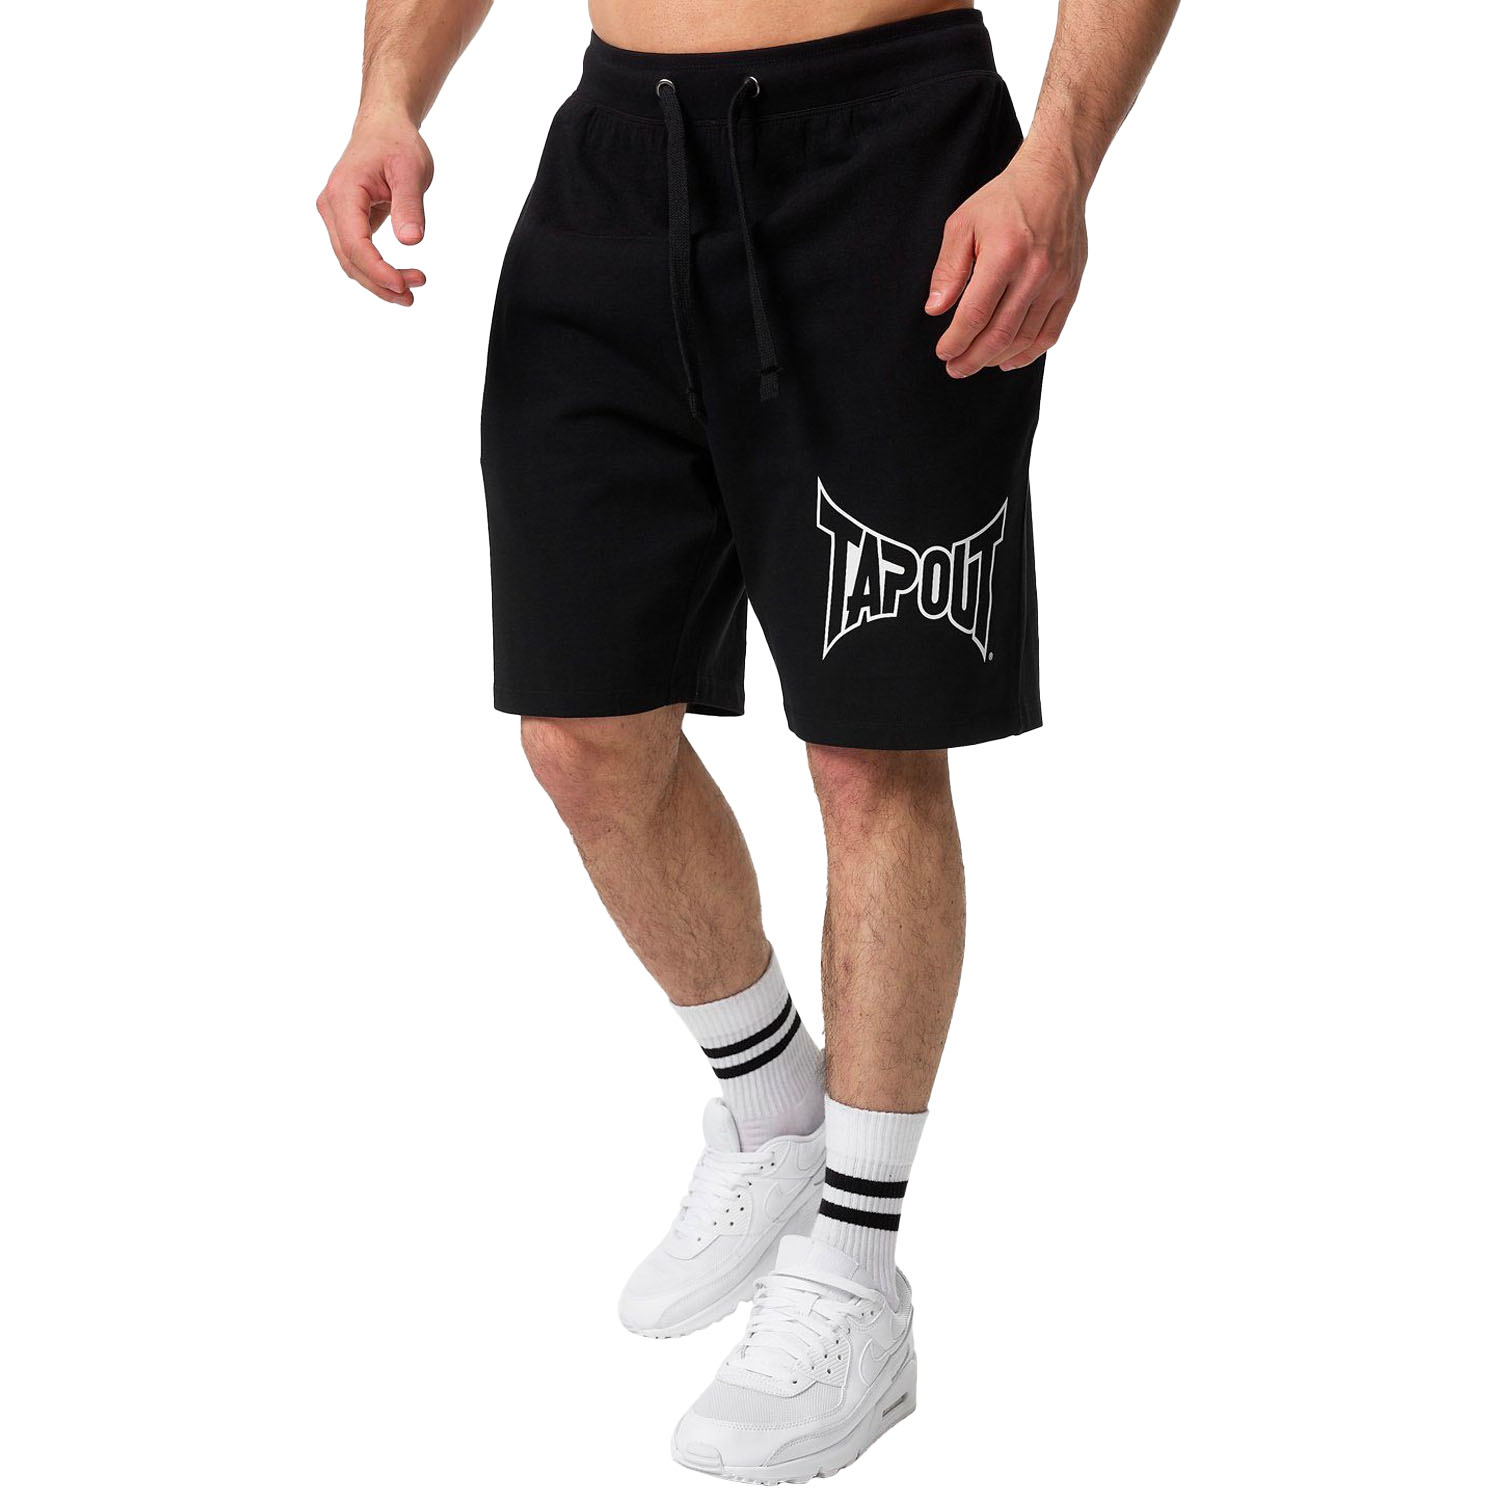 Tapout Fitness Shorts, Lifestyle Basic, schwarz-weiß